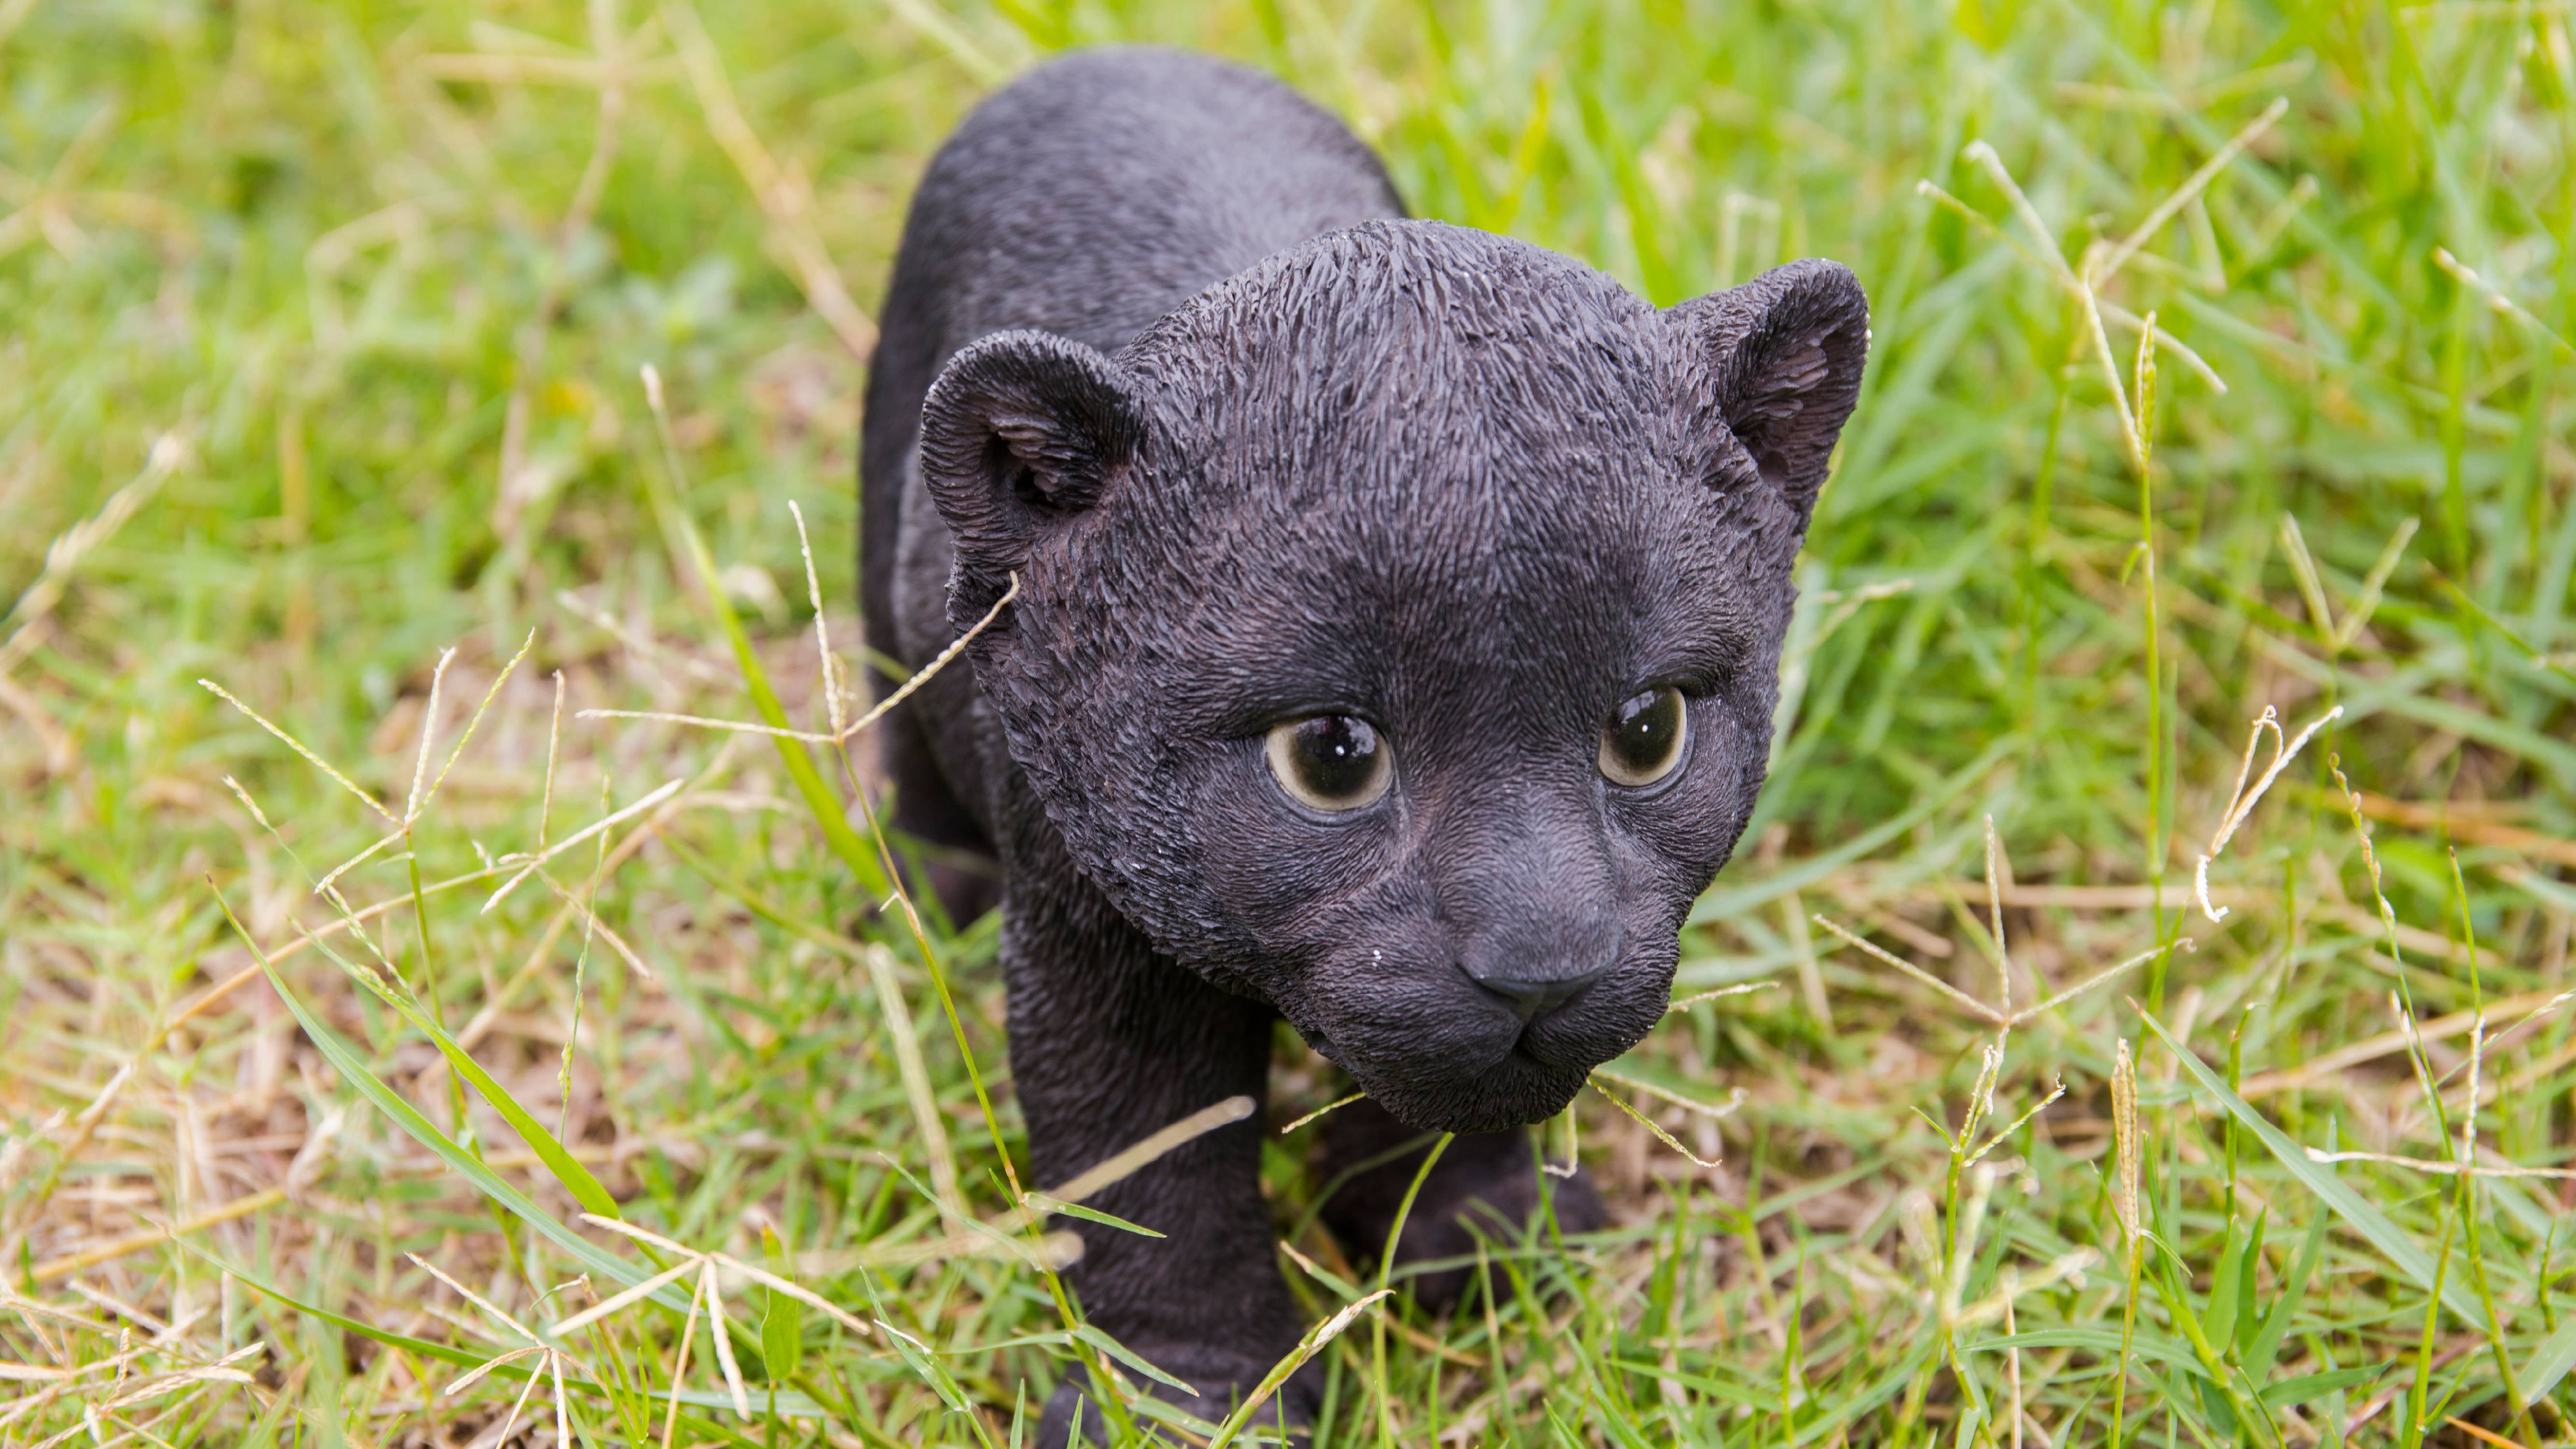 Realistic Black Panther Wildlife Animal Figurine Model Figure Kids Toys Gift 